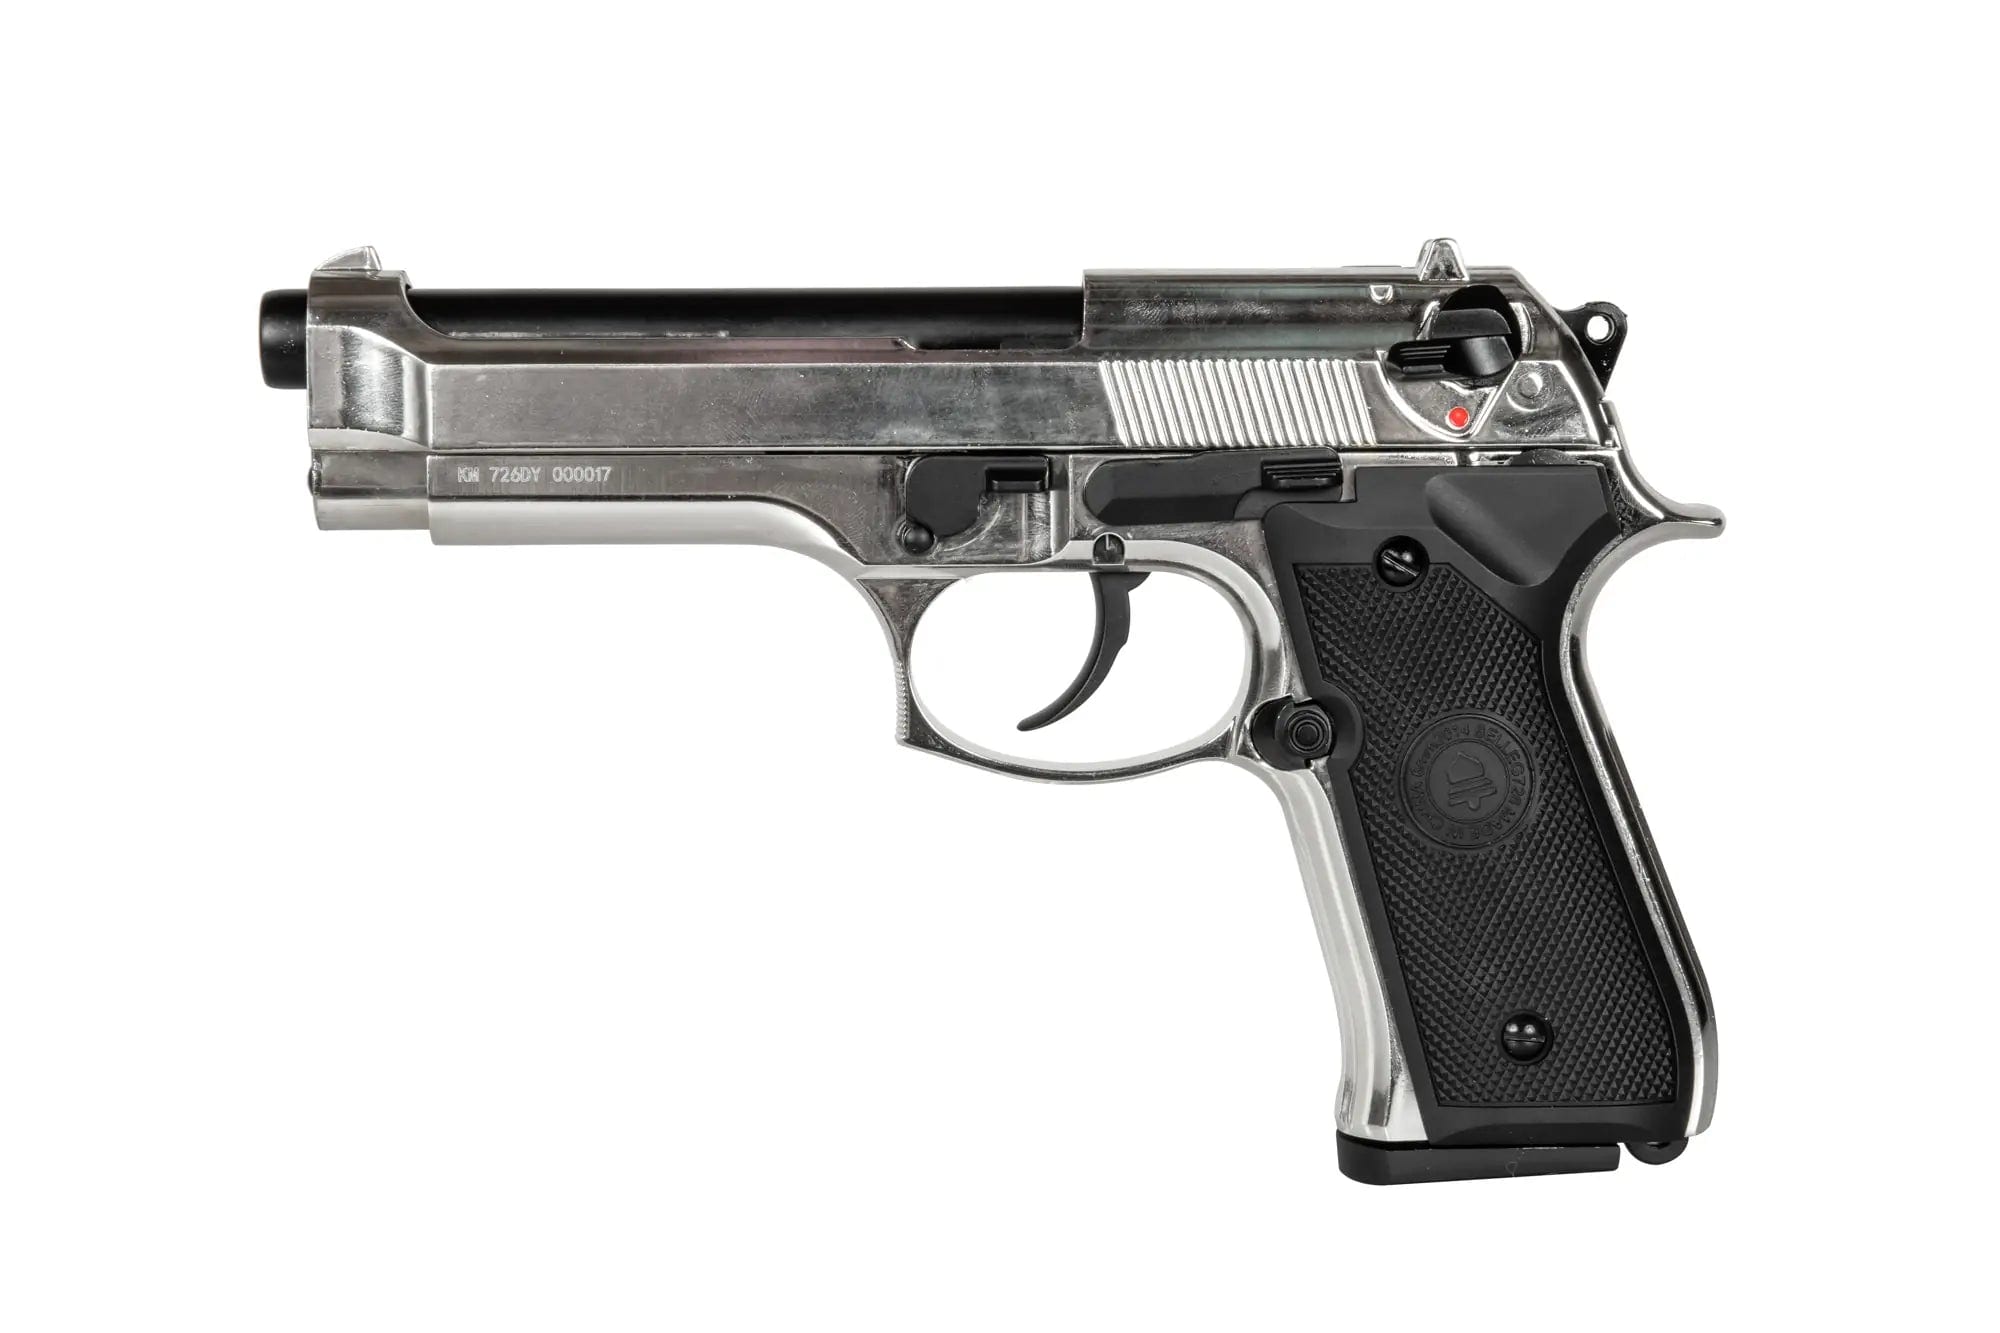 M92 Pistol Replica (726DY)